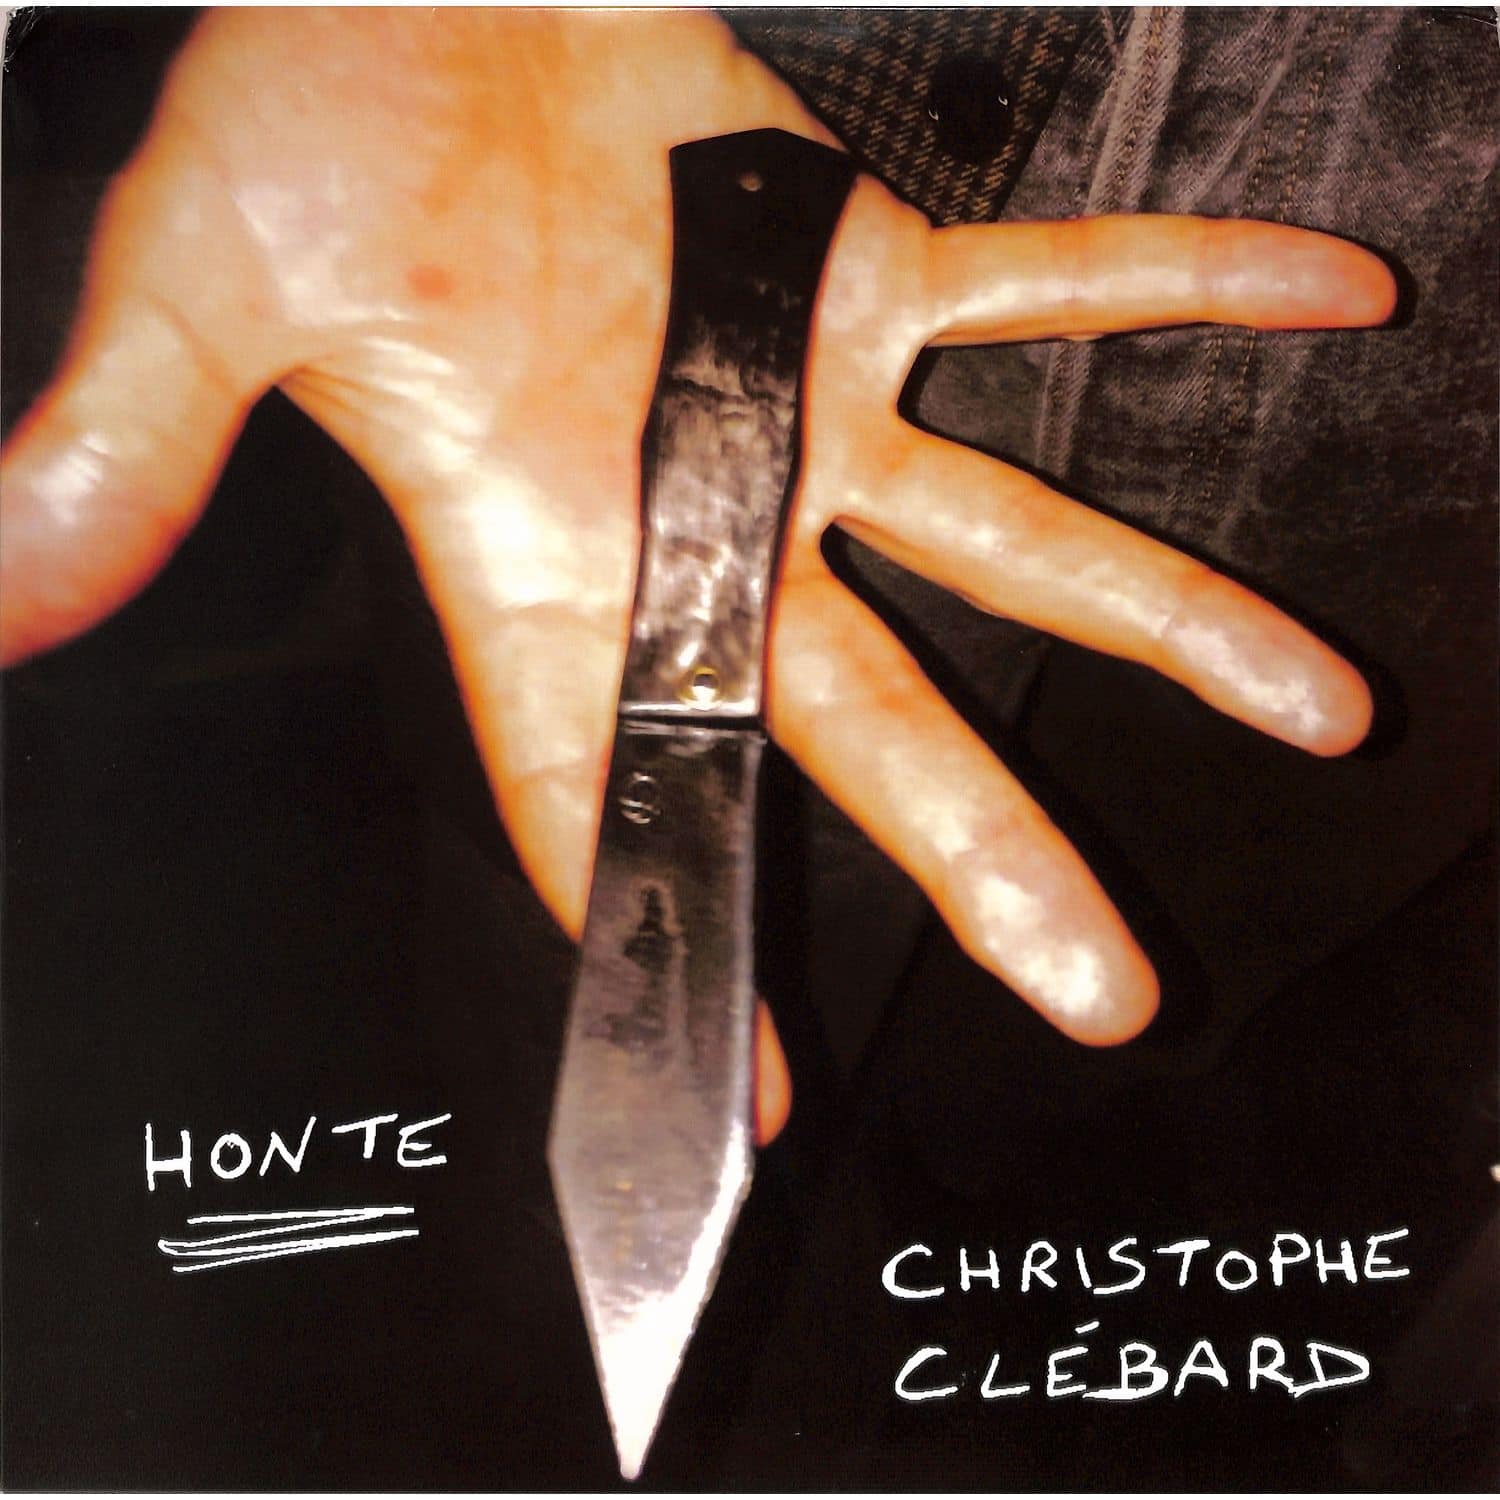 Christophe Clebard - HONTE 